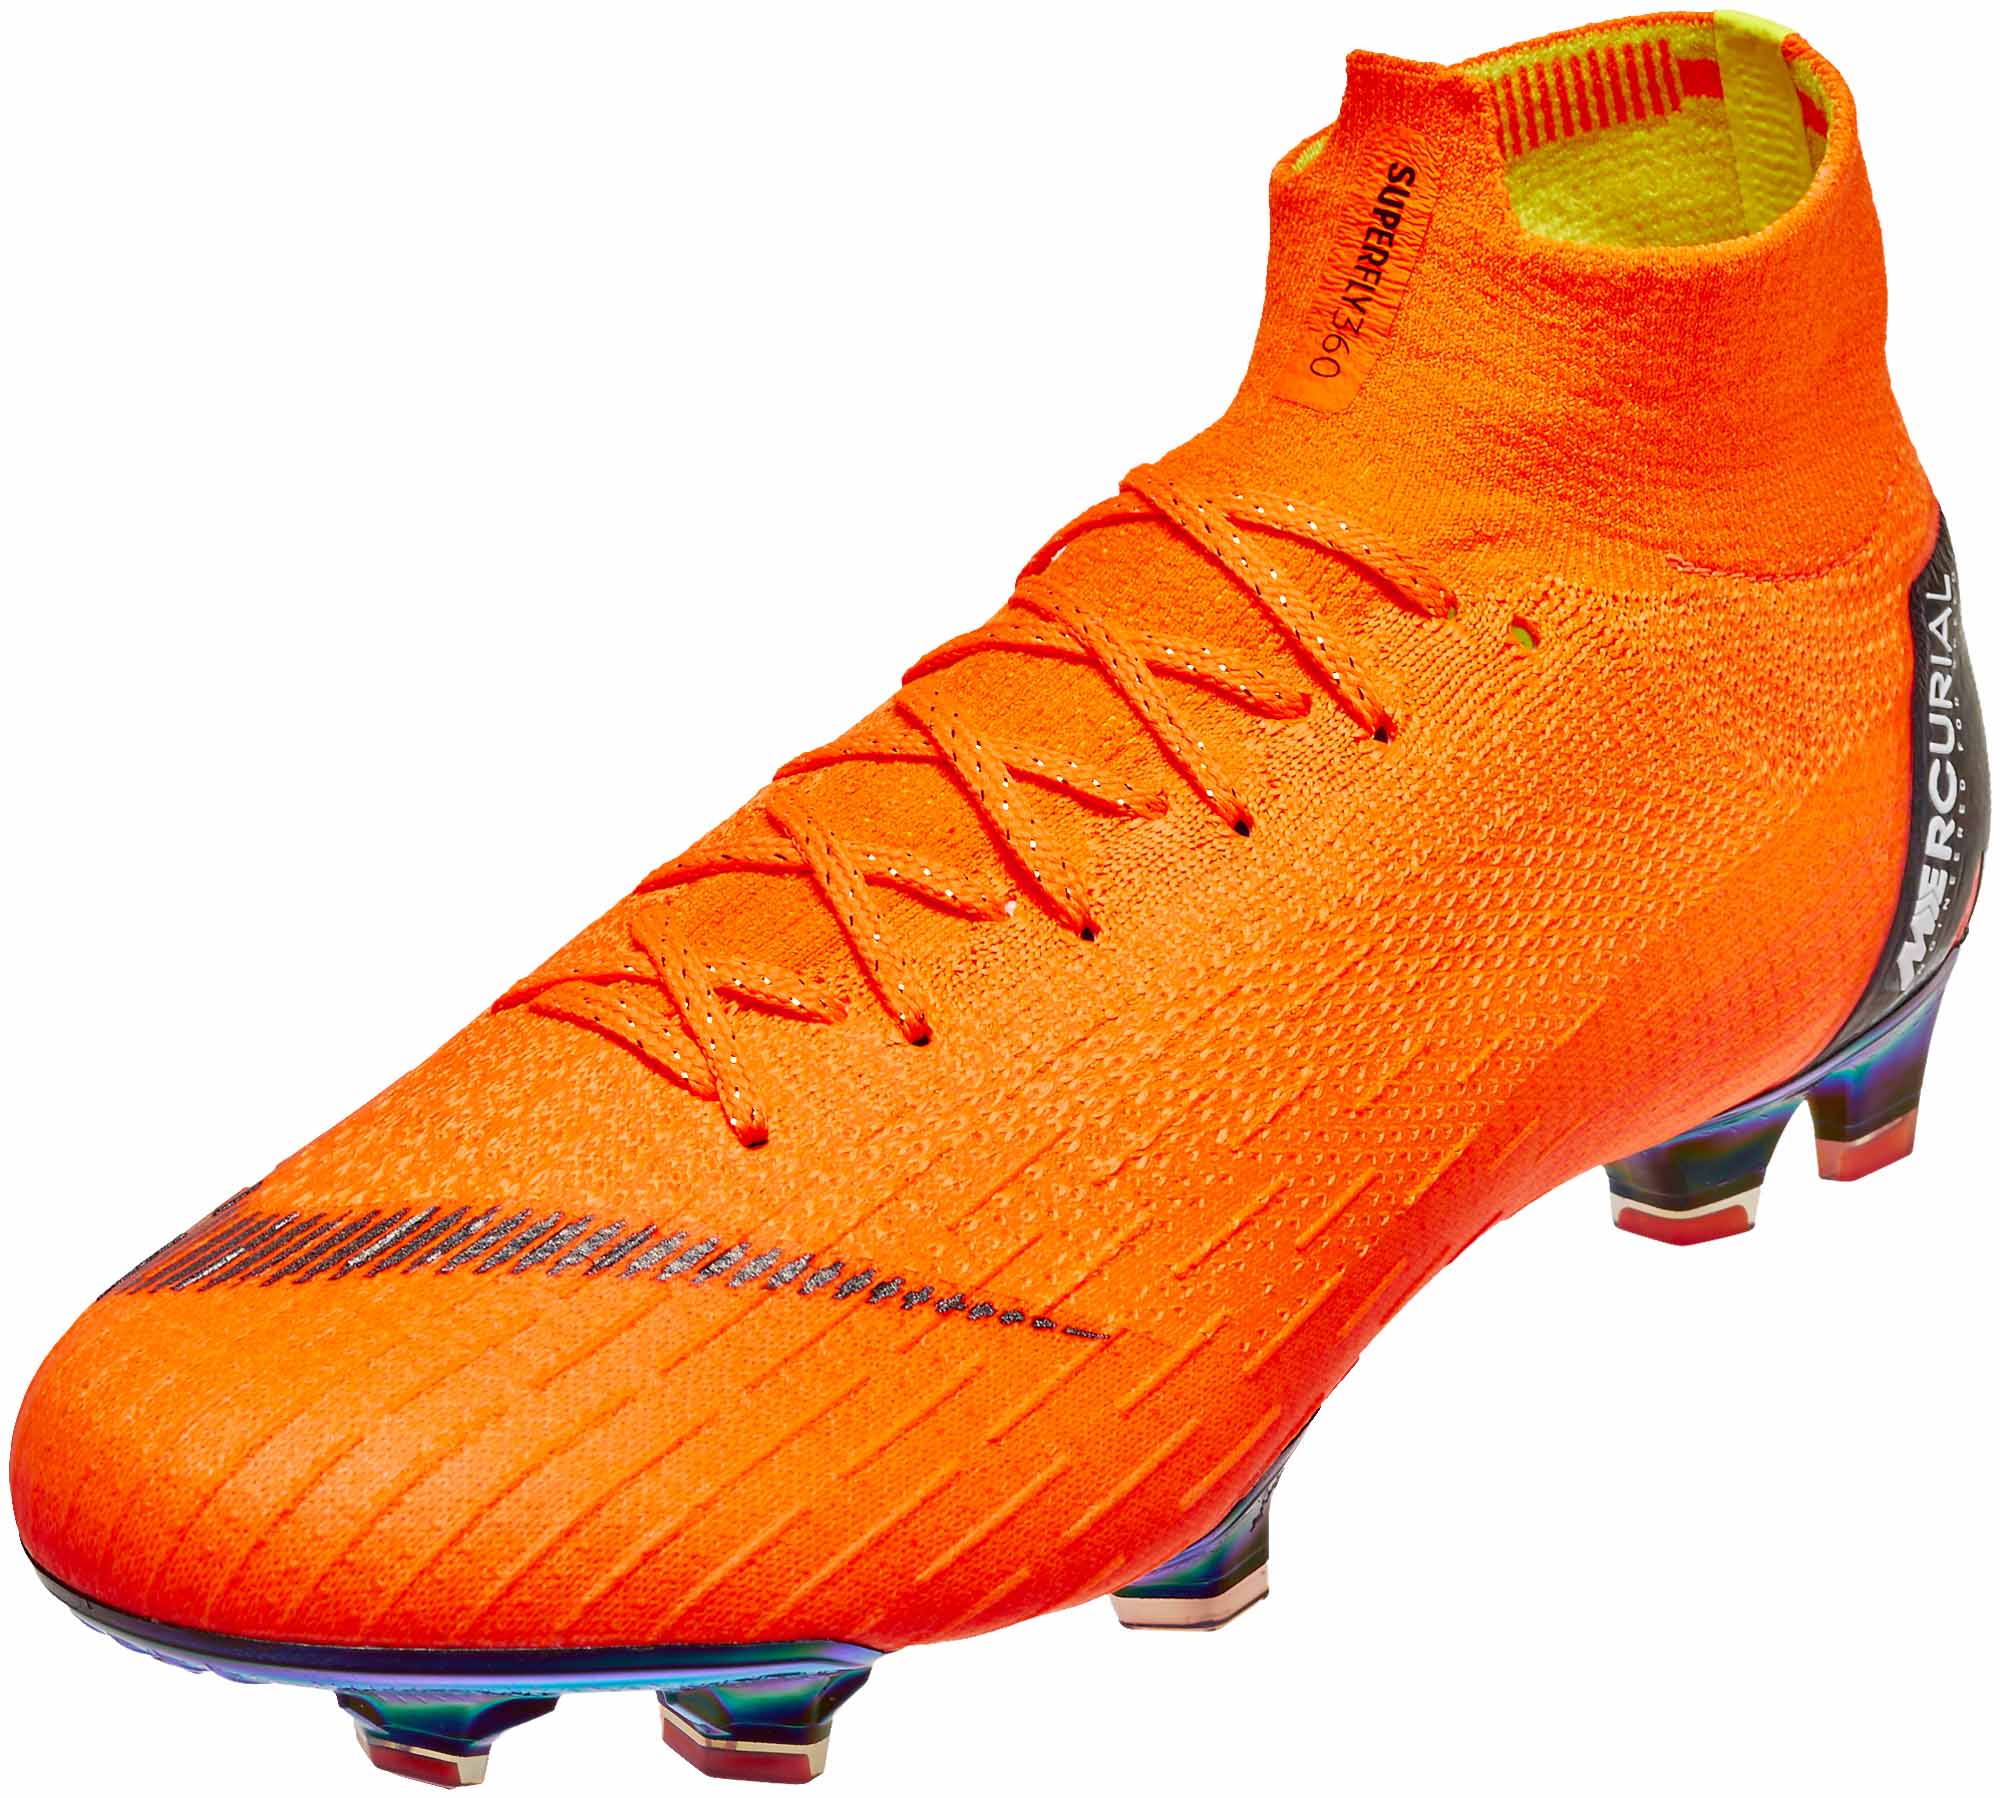 nike soccer shoes orange